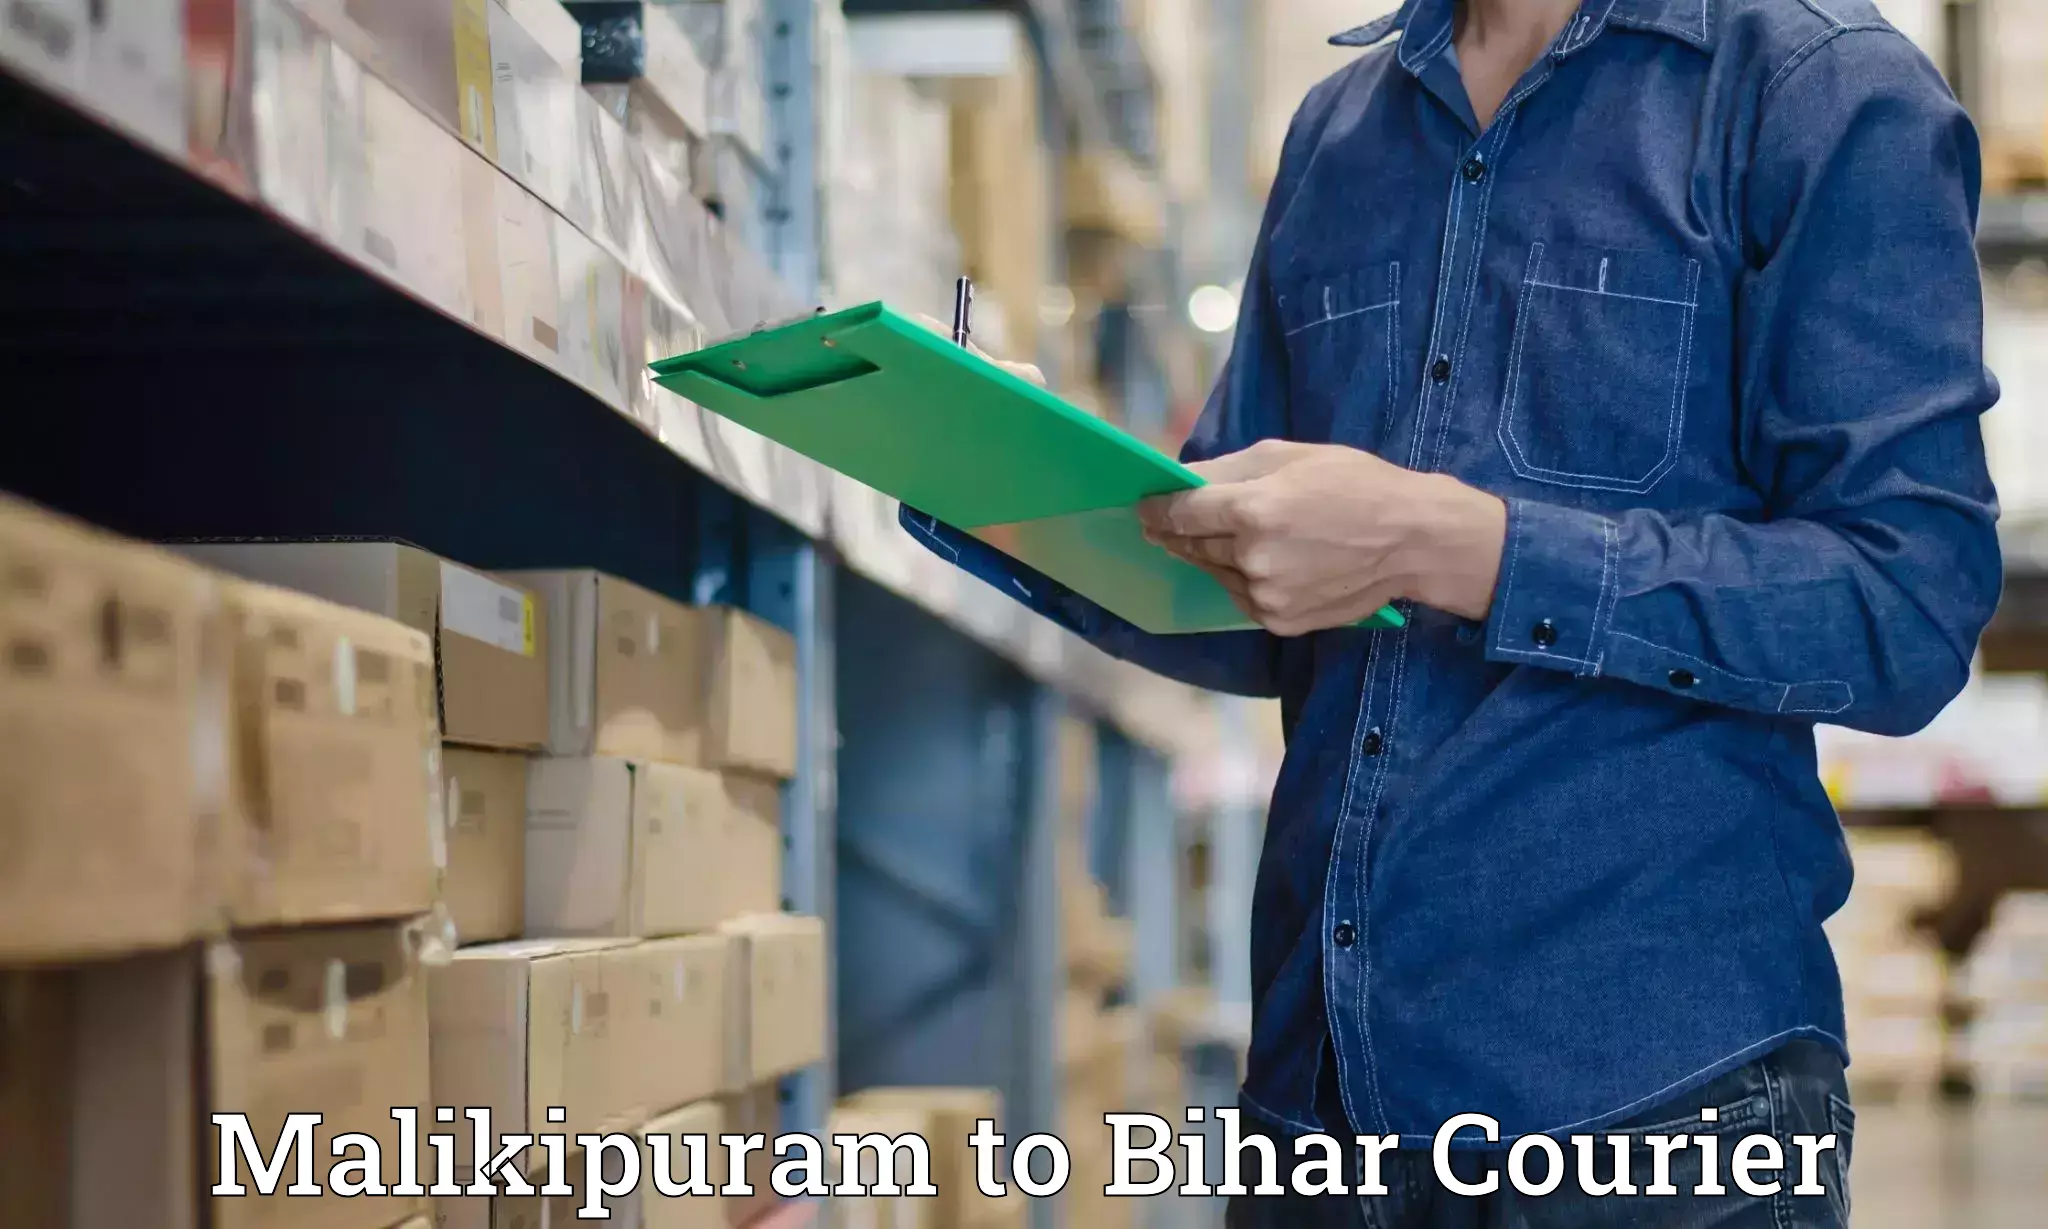 Reliable delivery network Malikipuram to Mirganj